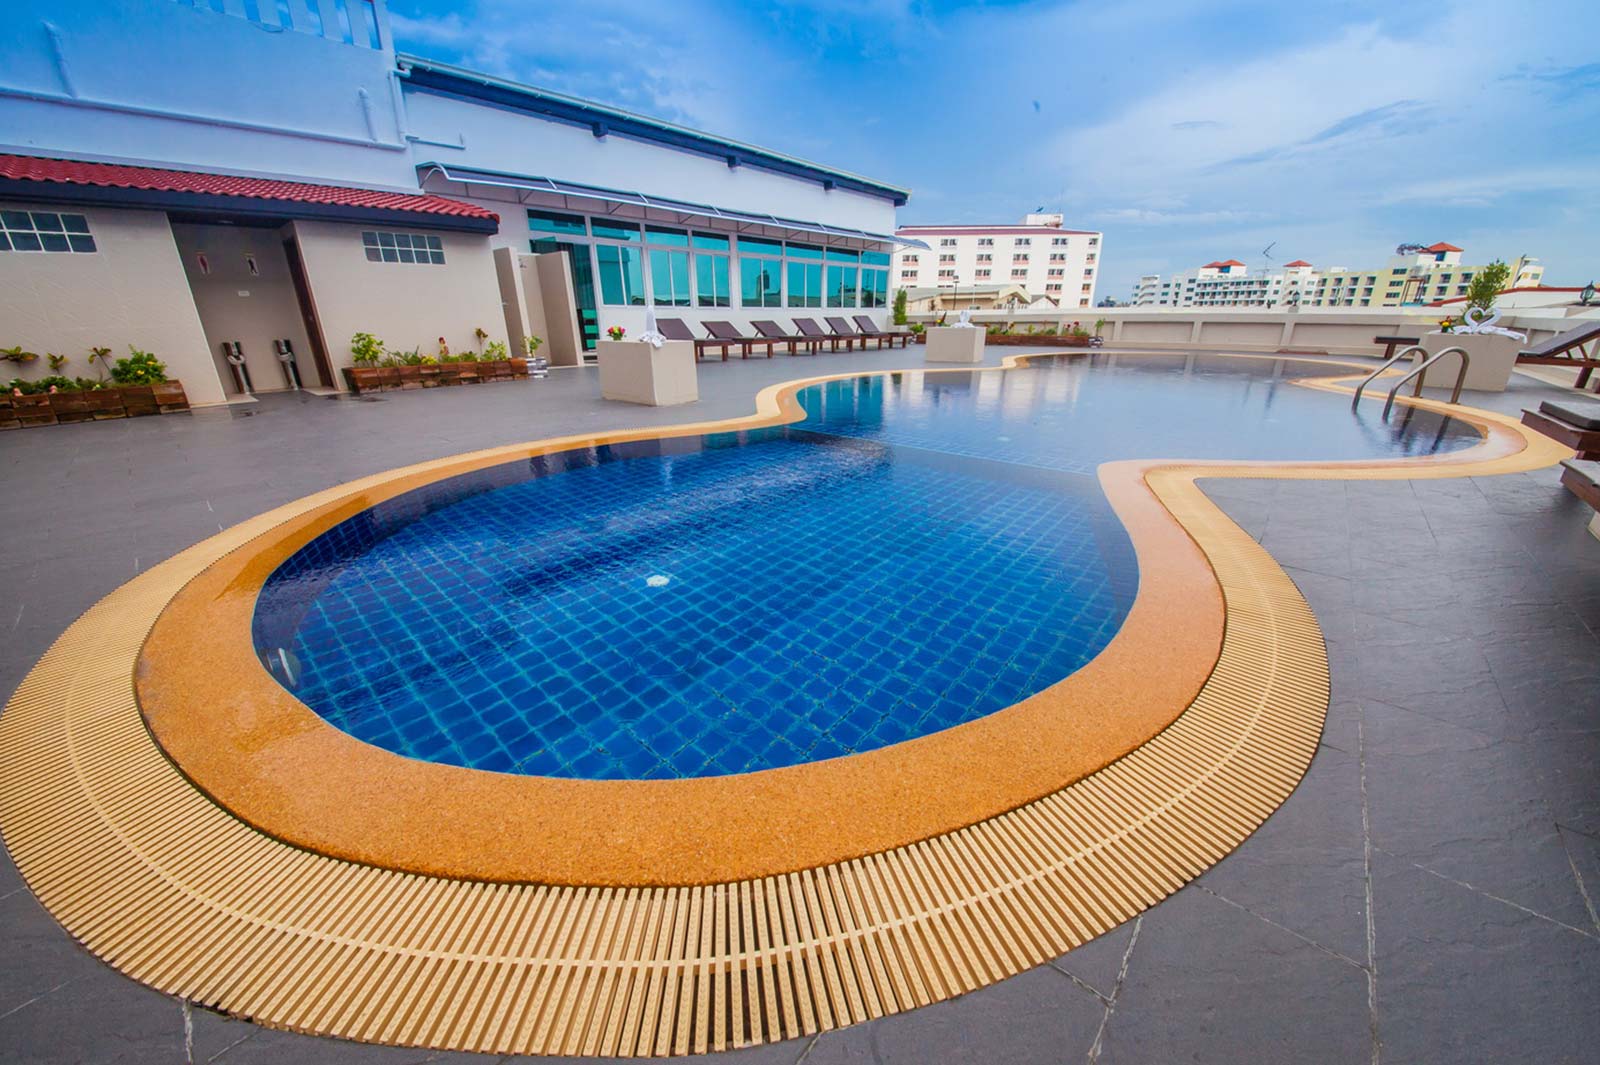 Swimming Pool - Facilities & Services The Grand Day Night Hotel in pattaya , pattaya hotel, pattaya resort, sout pattaya hotel